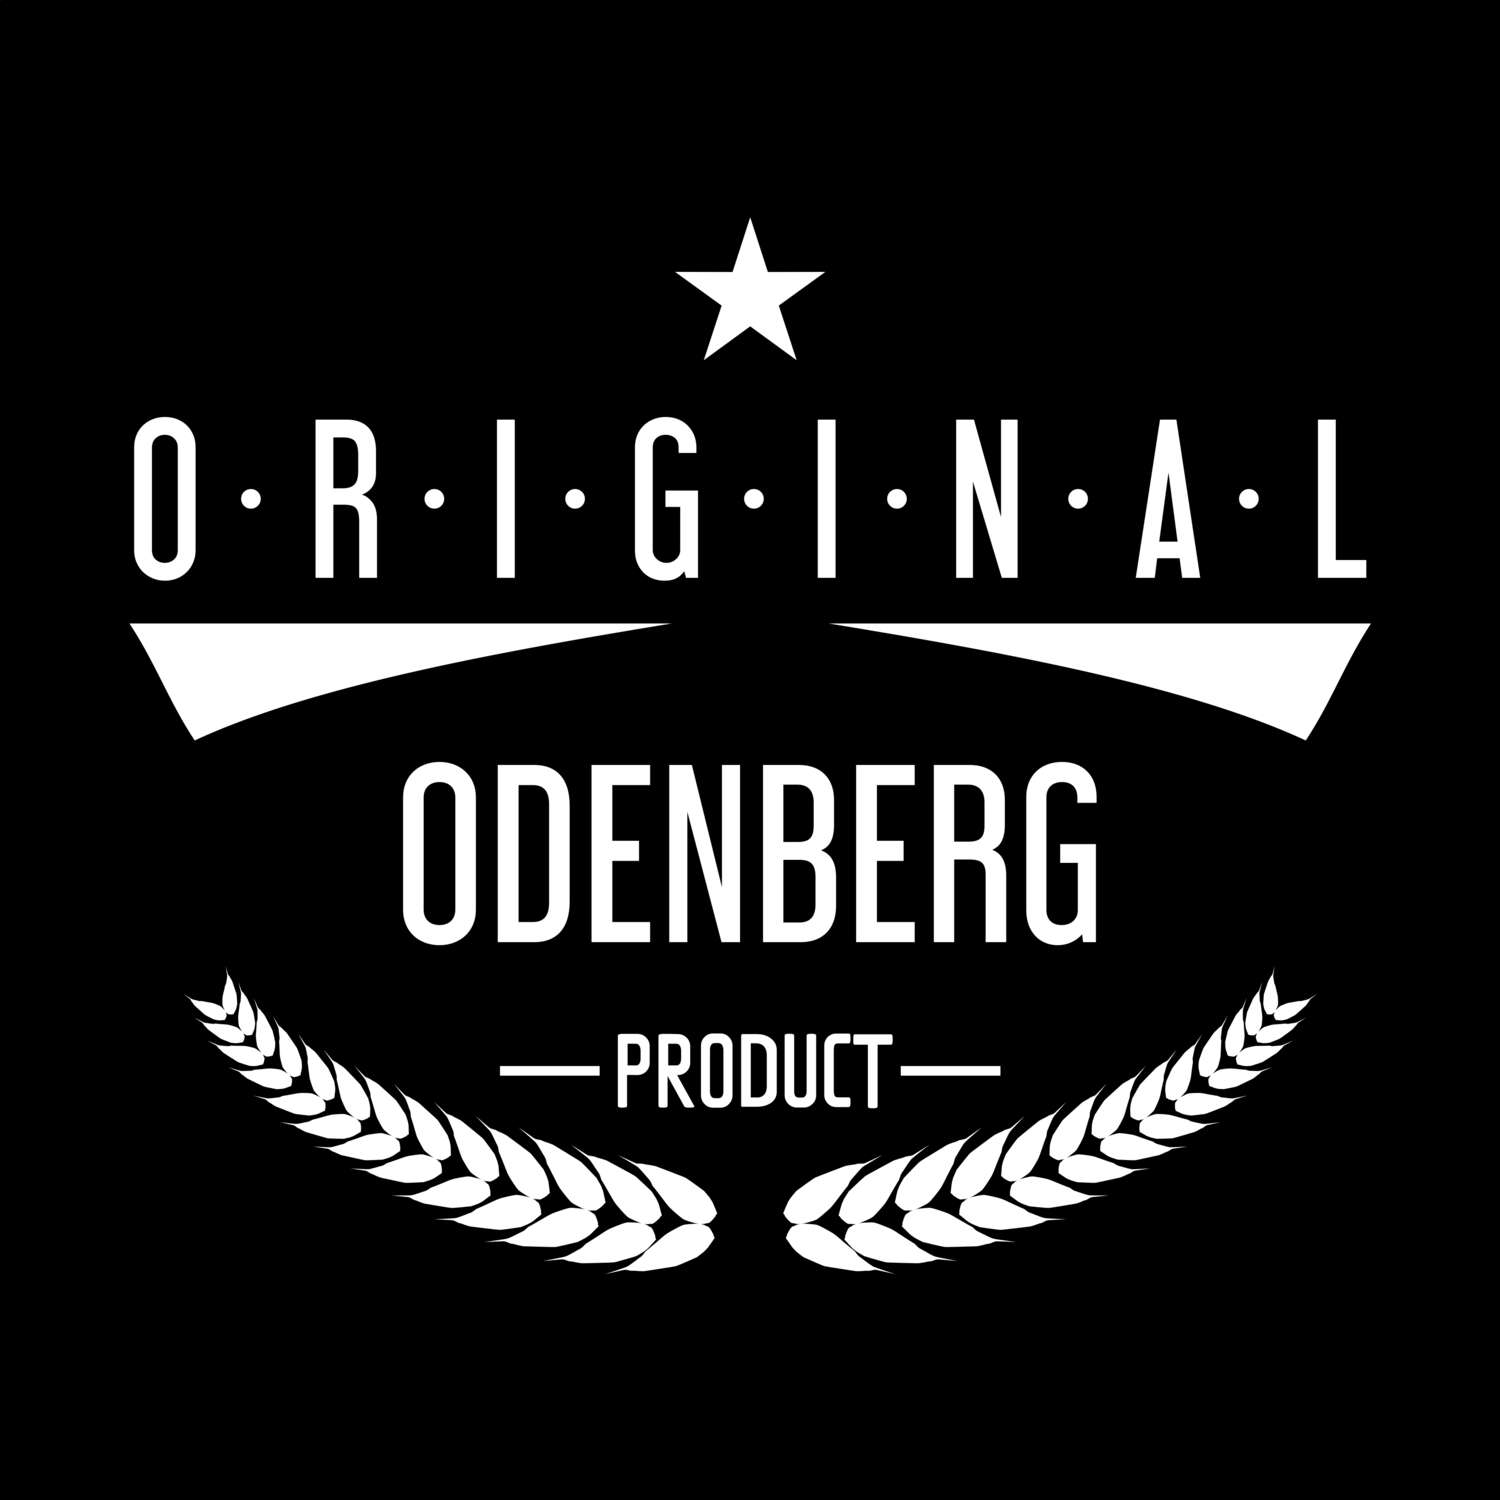 Odenberg T-Shirt »Original Product«